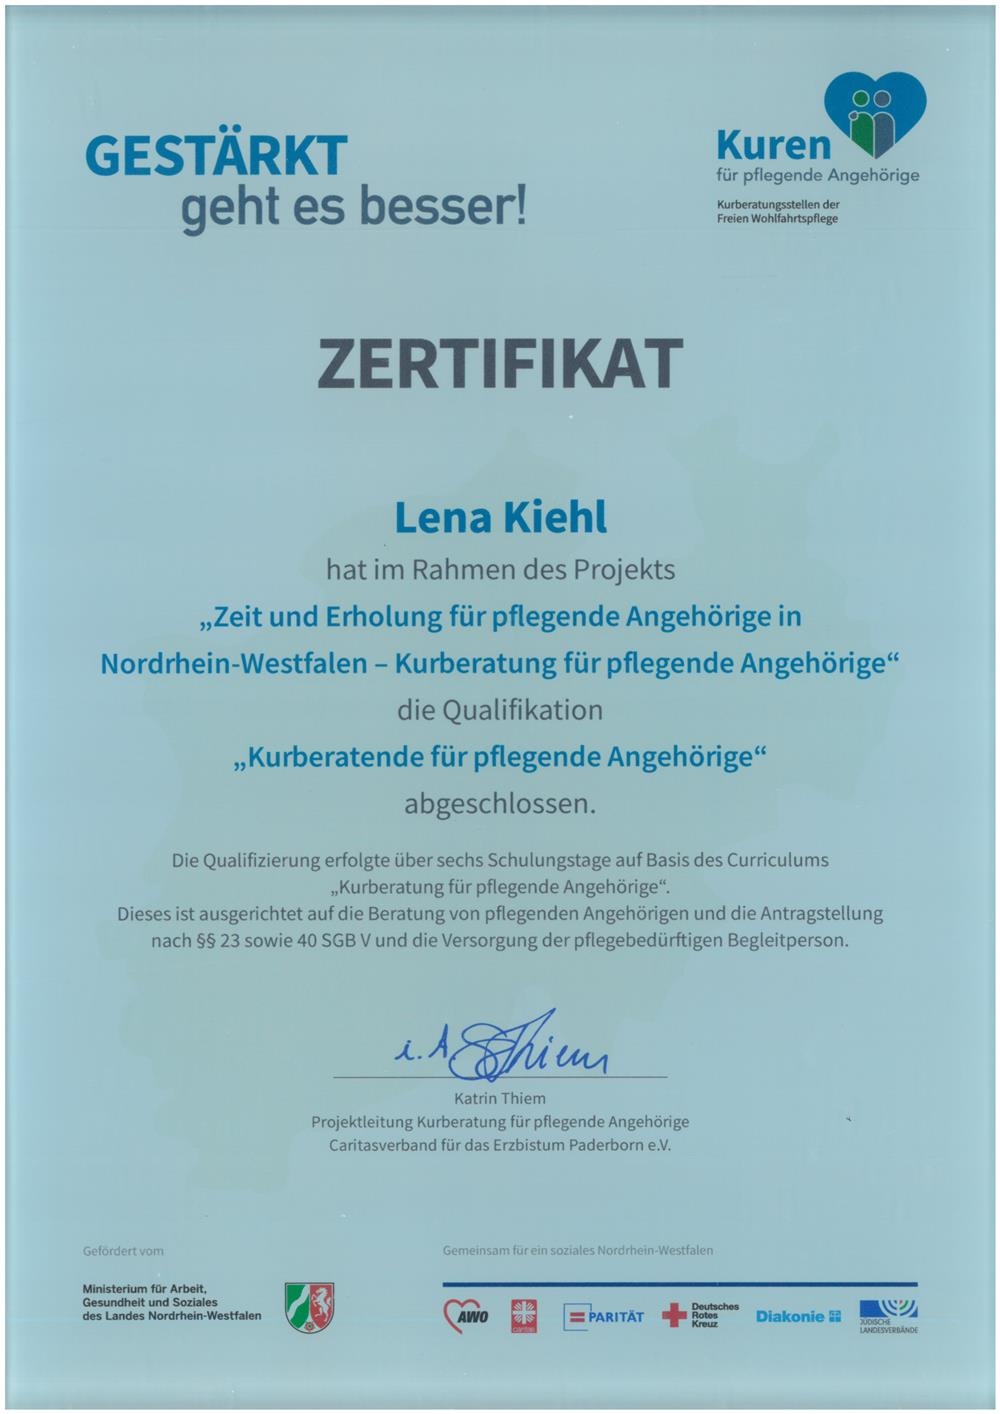 Zertifikat Frau Kiehl